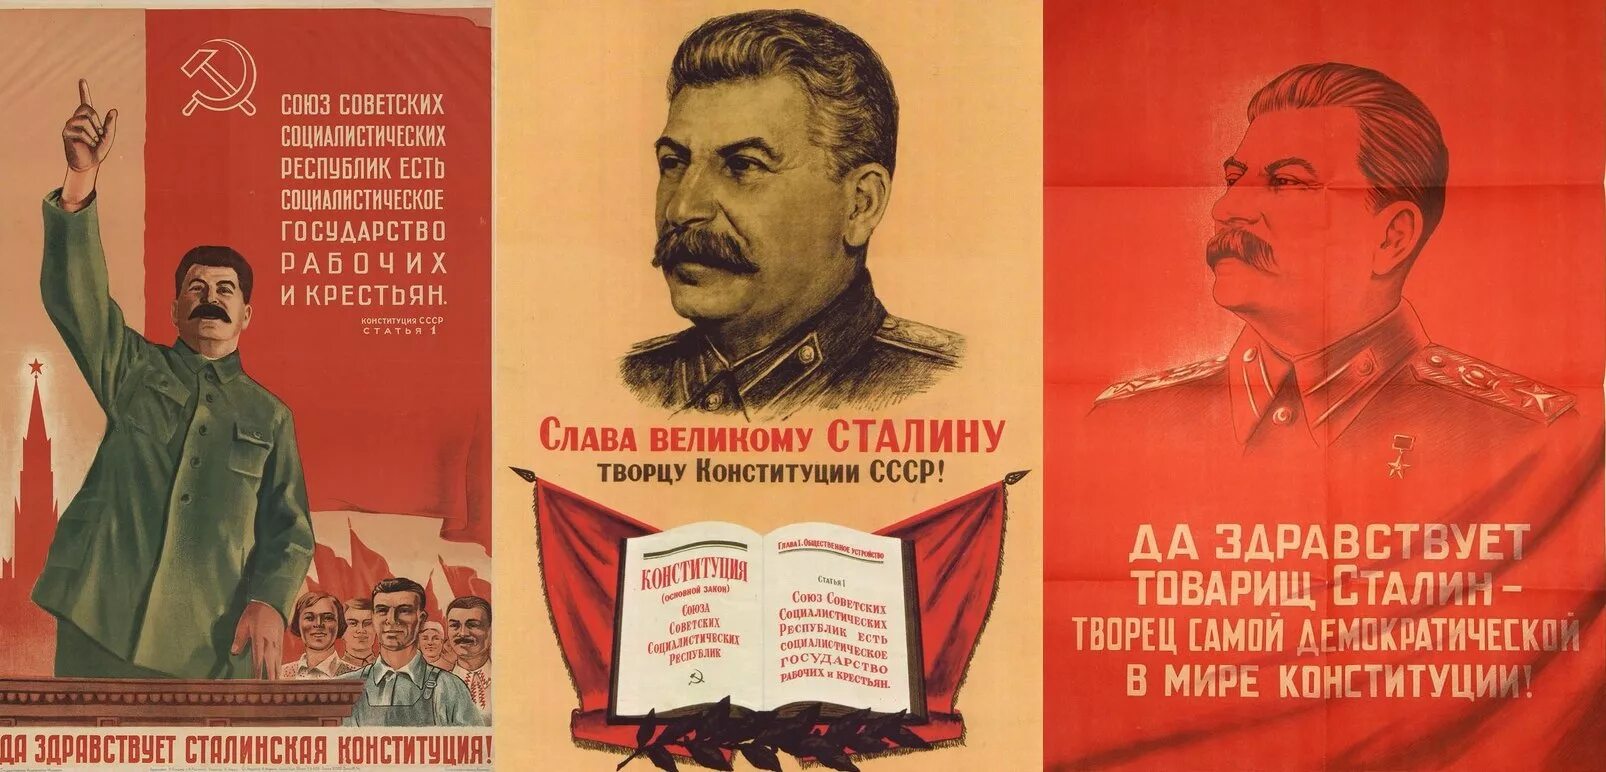 Конституции ссср принятой в 1936 г. Конституция СССР 1936 года сталинская. Сталин и Конституция 1936. Сталинская Конституция 1936 года плакат. Сталин о Конституции 1936 года.